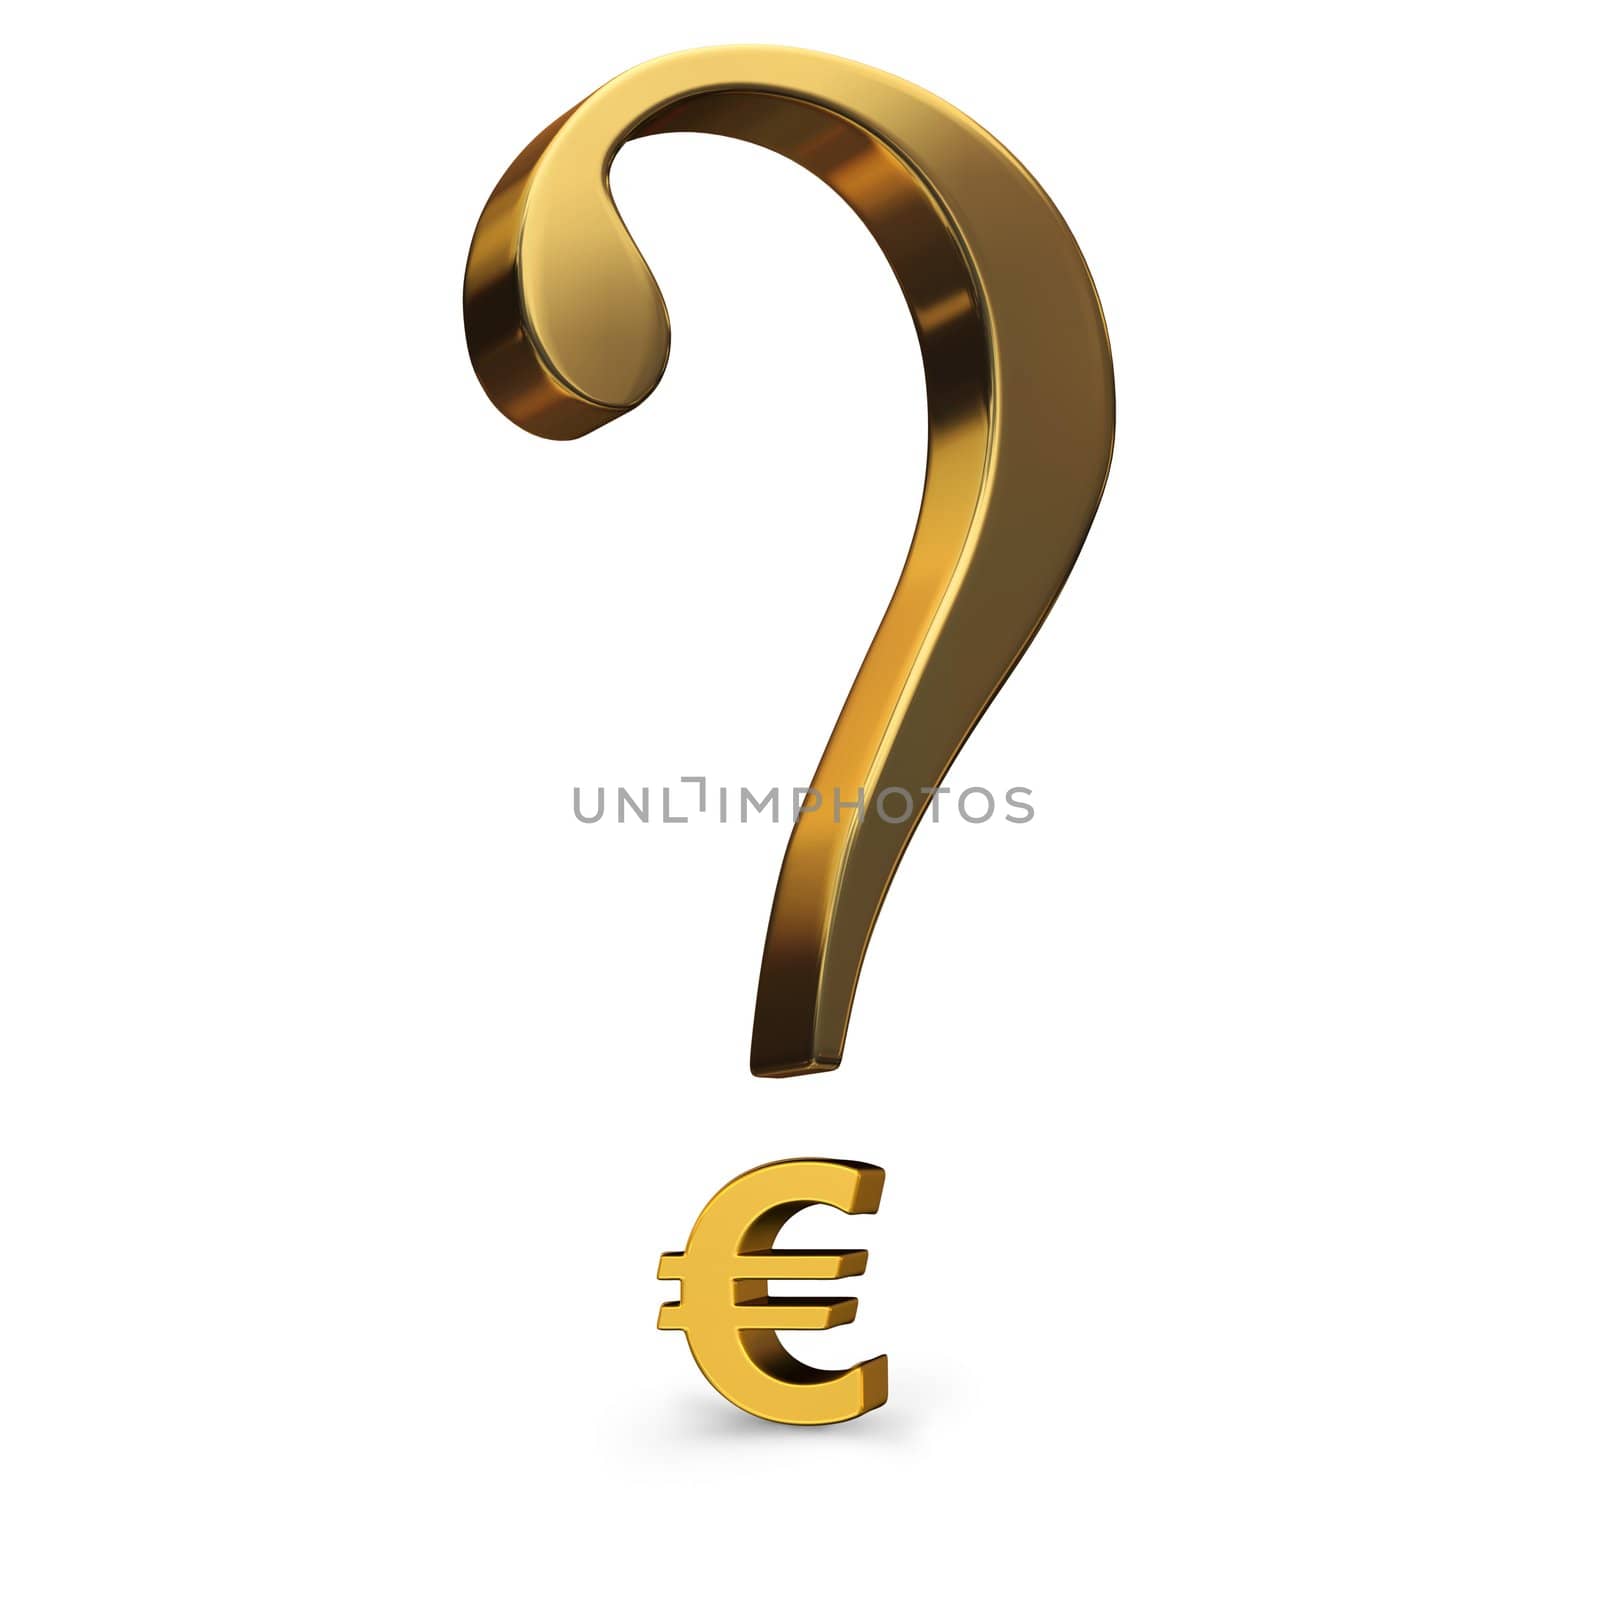 Uncertain Euro by Em3